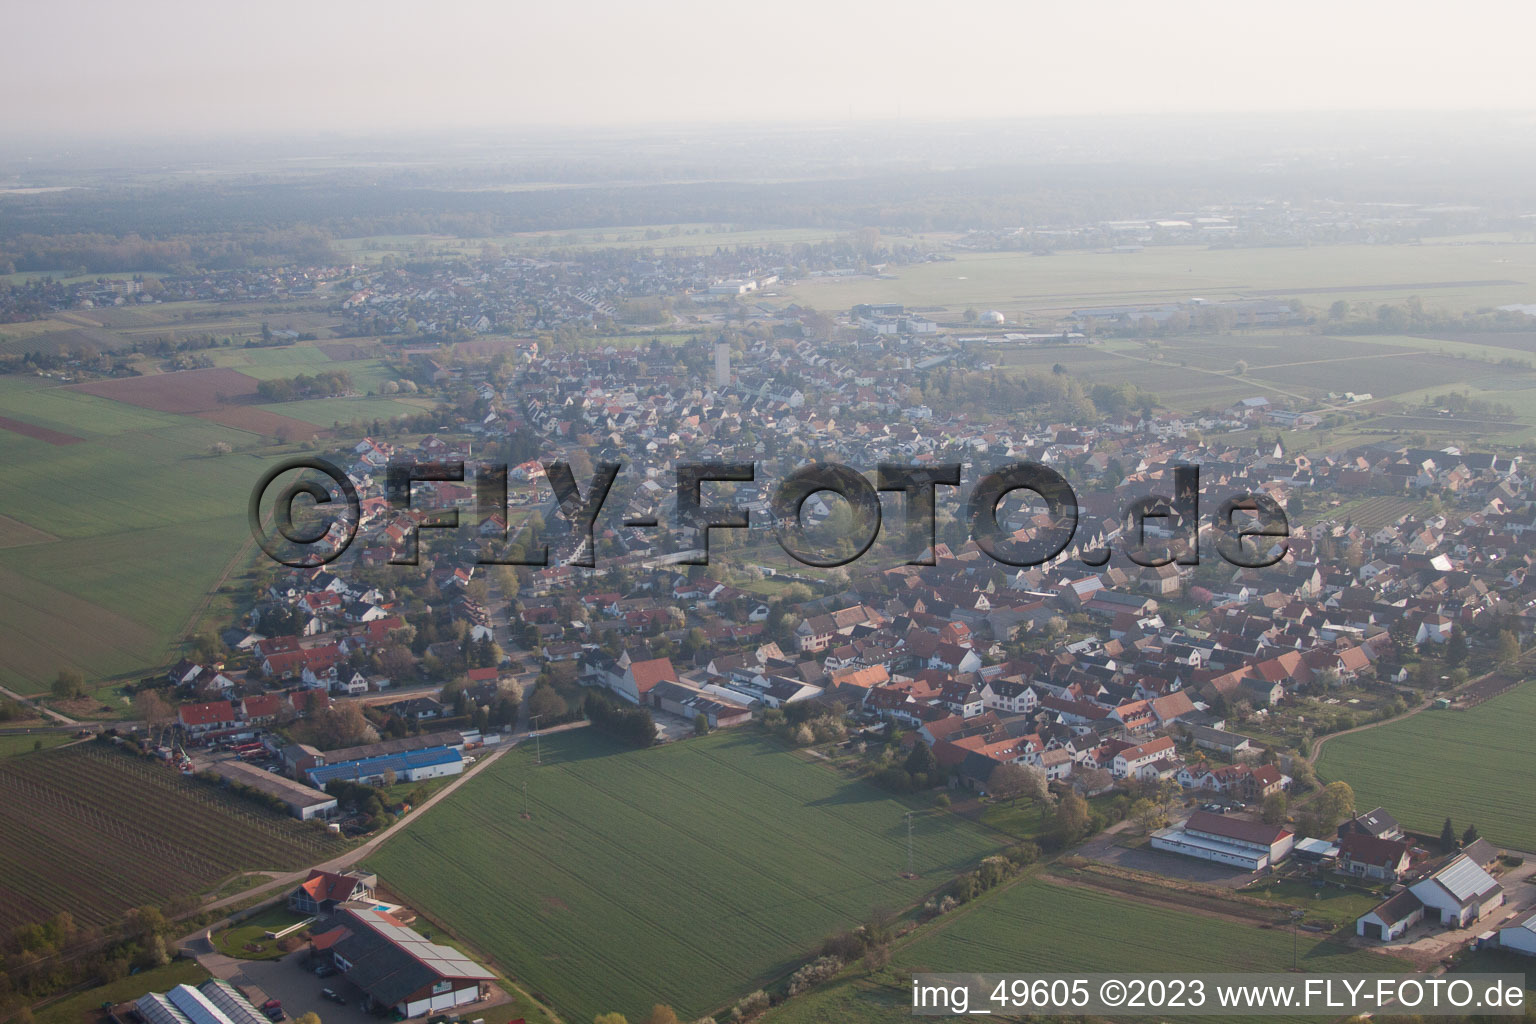 District Lachen in Neustadt an der Weinstraße in the state Rhineland-Palatinate, Germany viewn from the air